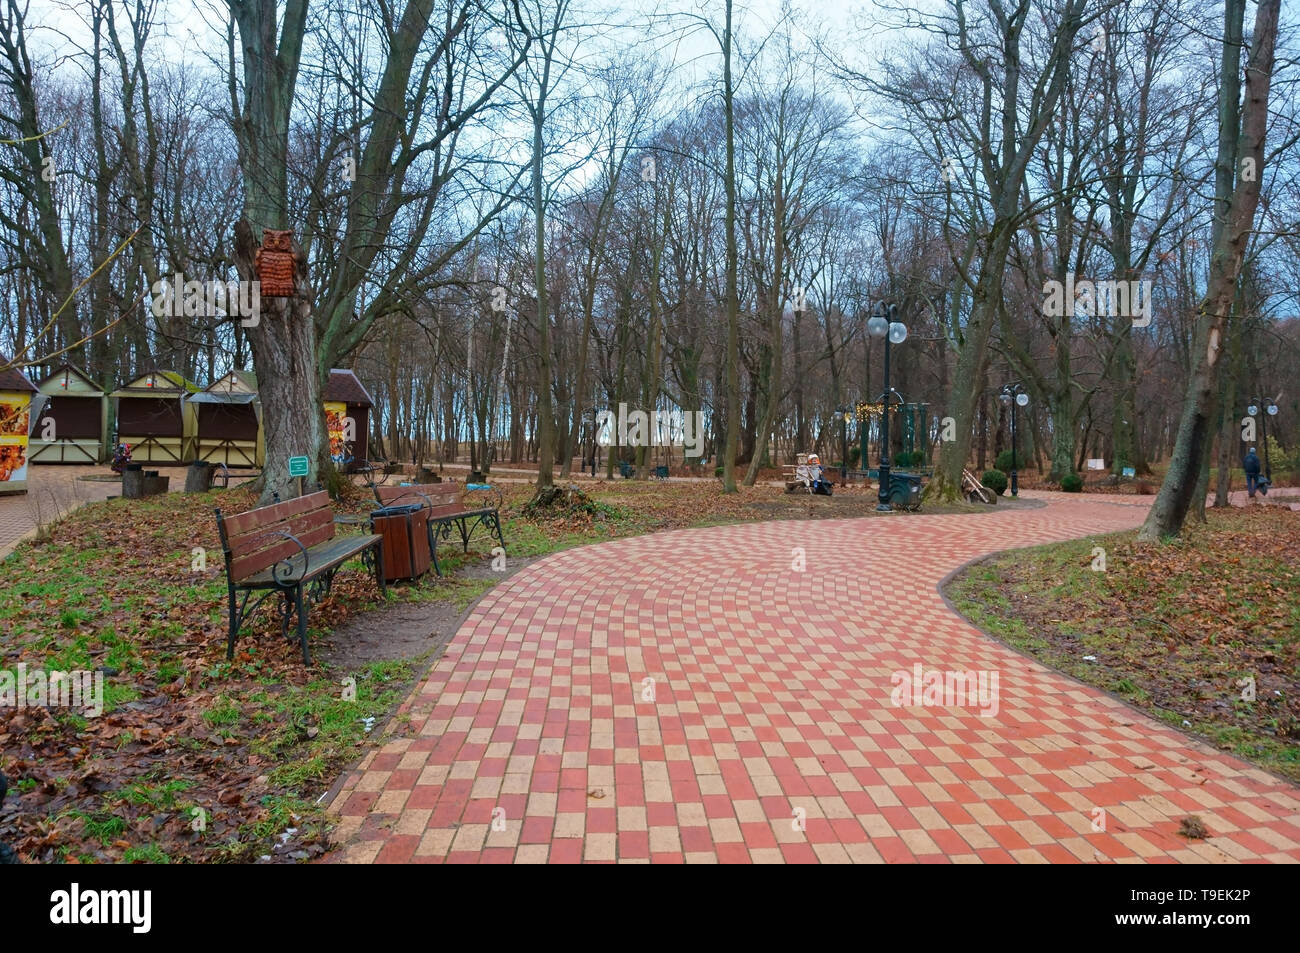 Park area ricreativa della città, Moritz Becker Park, Yantarny village, regione Kaliningradsky, Russia, 20 Gen 2019 Foto Stock